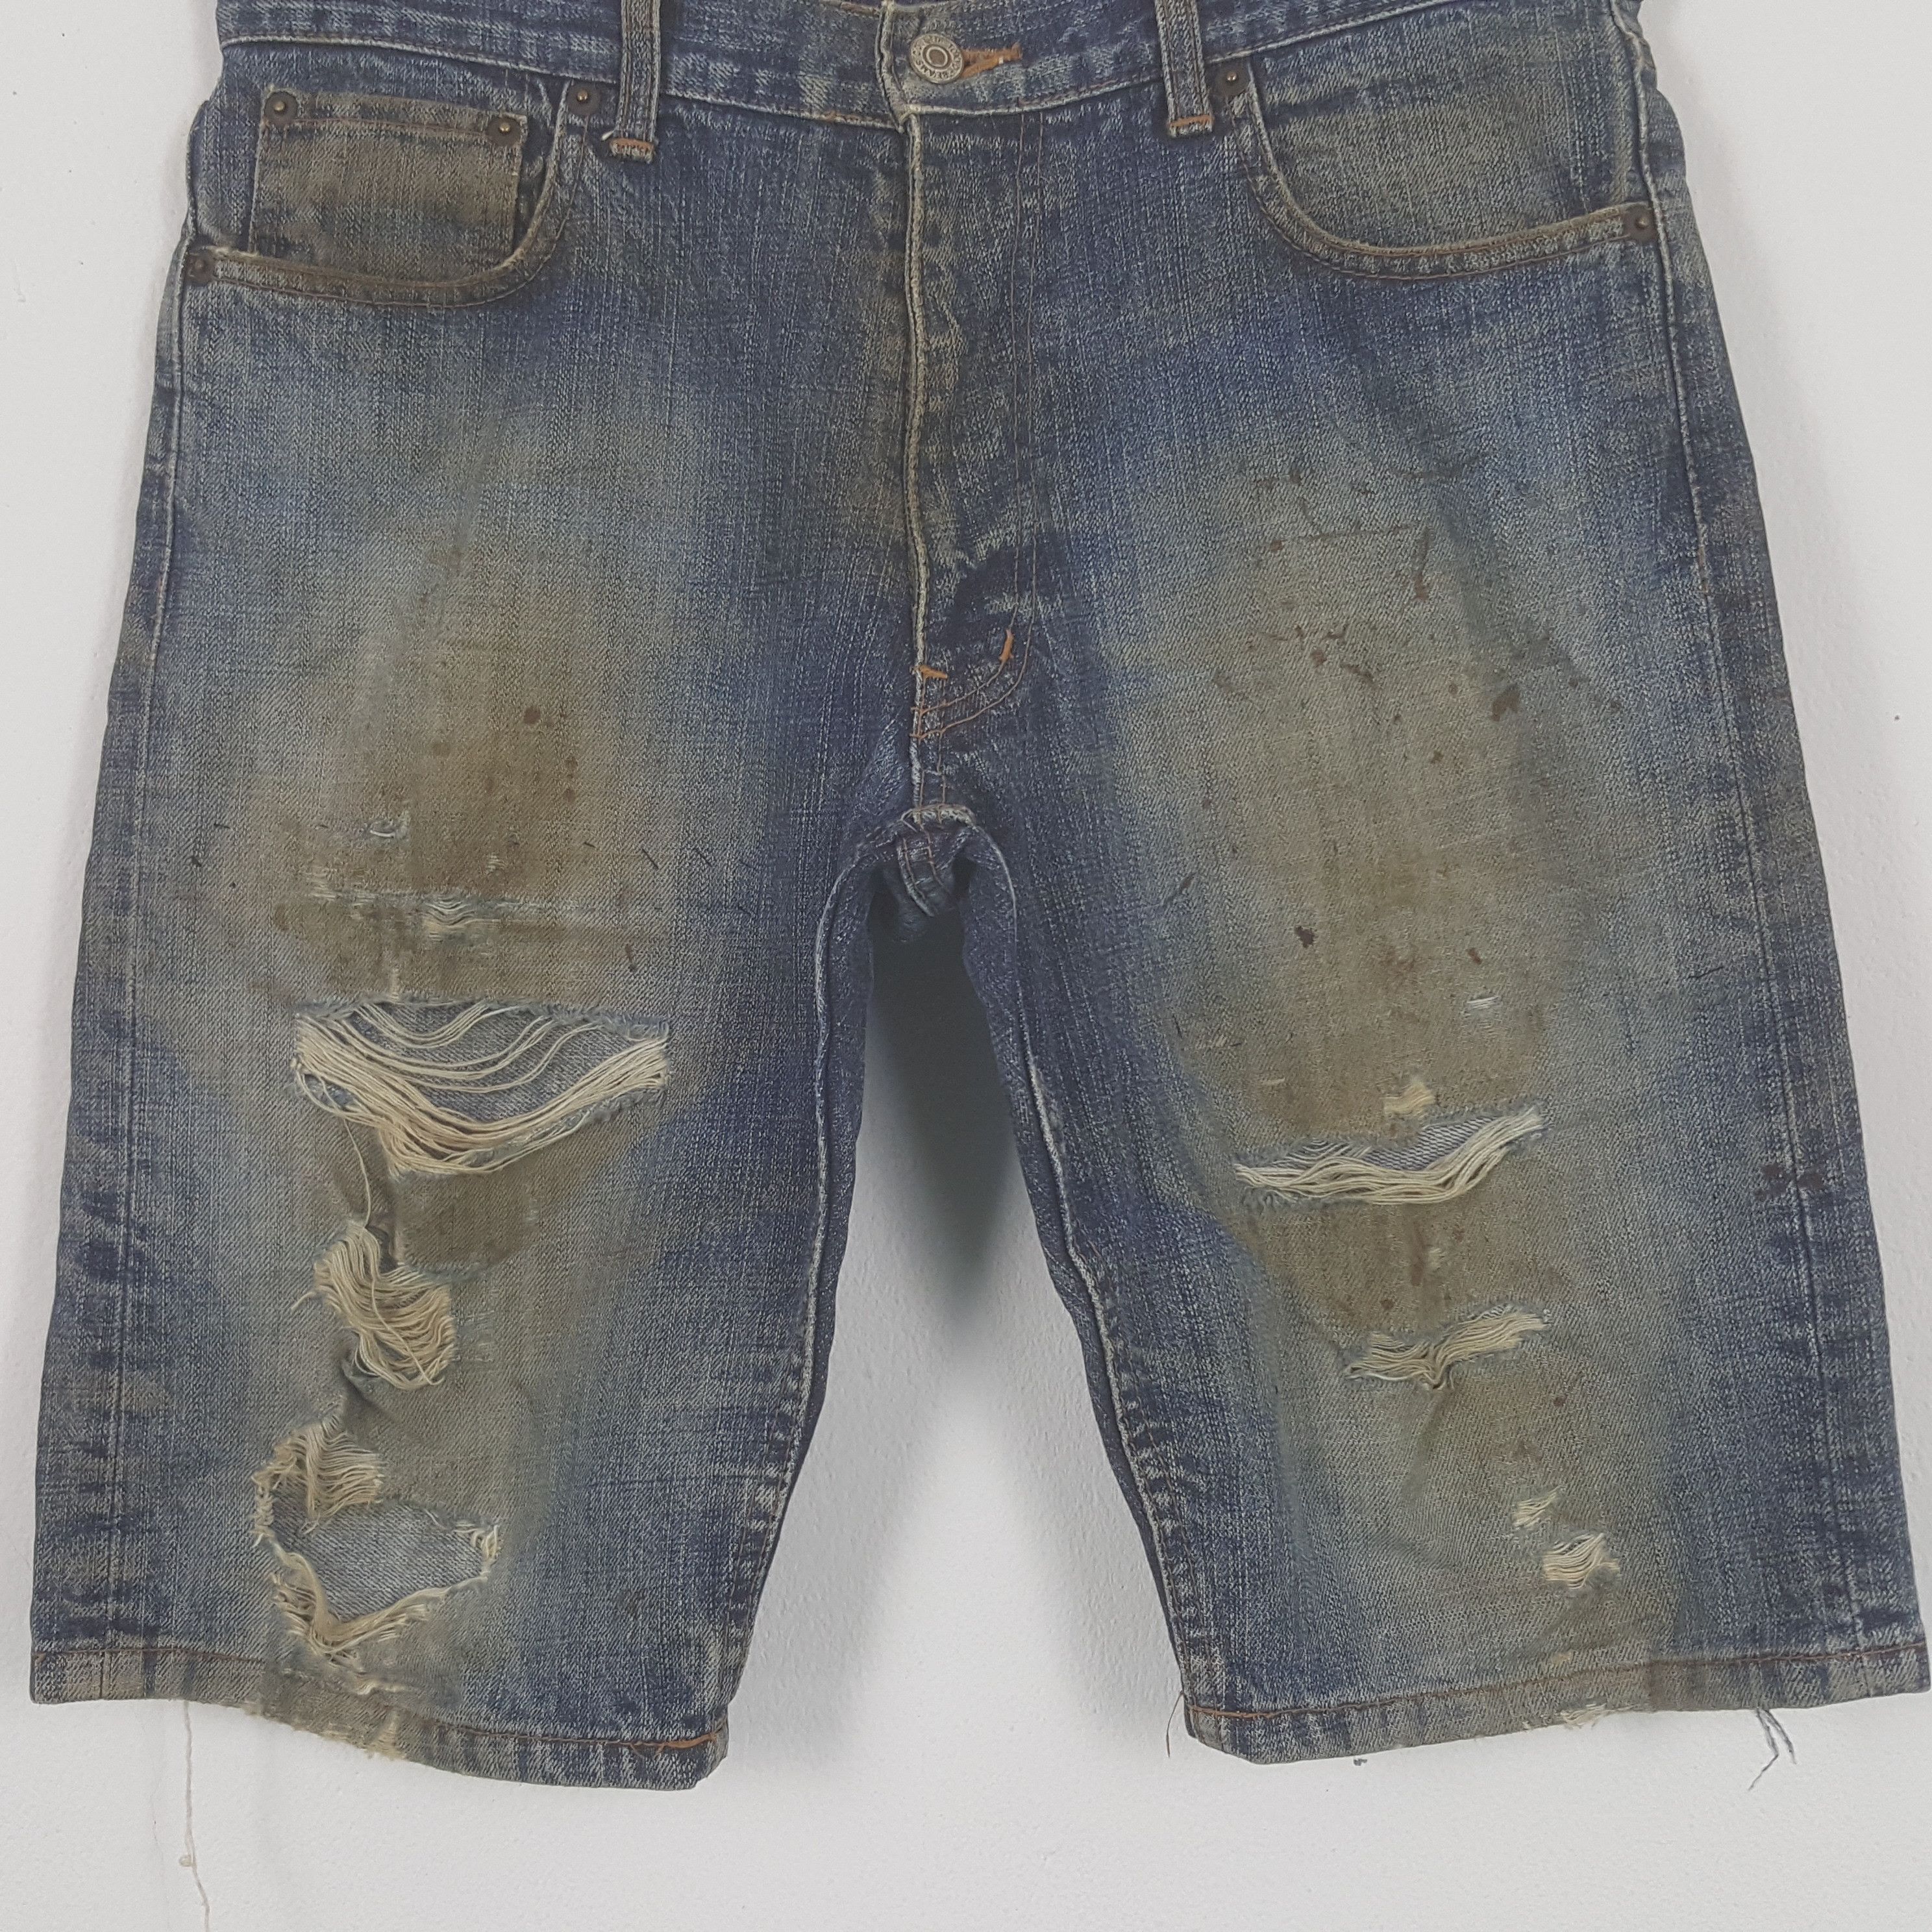 Vintage Vintage Beams Japanese Brand Distressed Shorts Denim Jeans Size US 32 / EU 48 - 4 Thumbnail